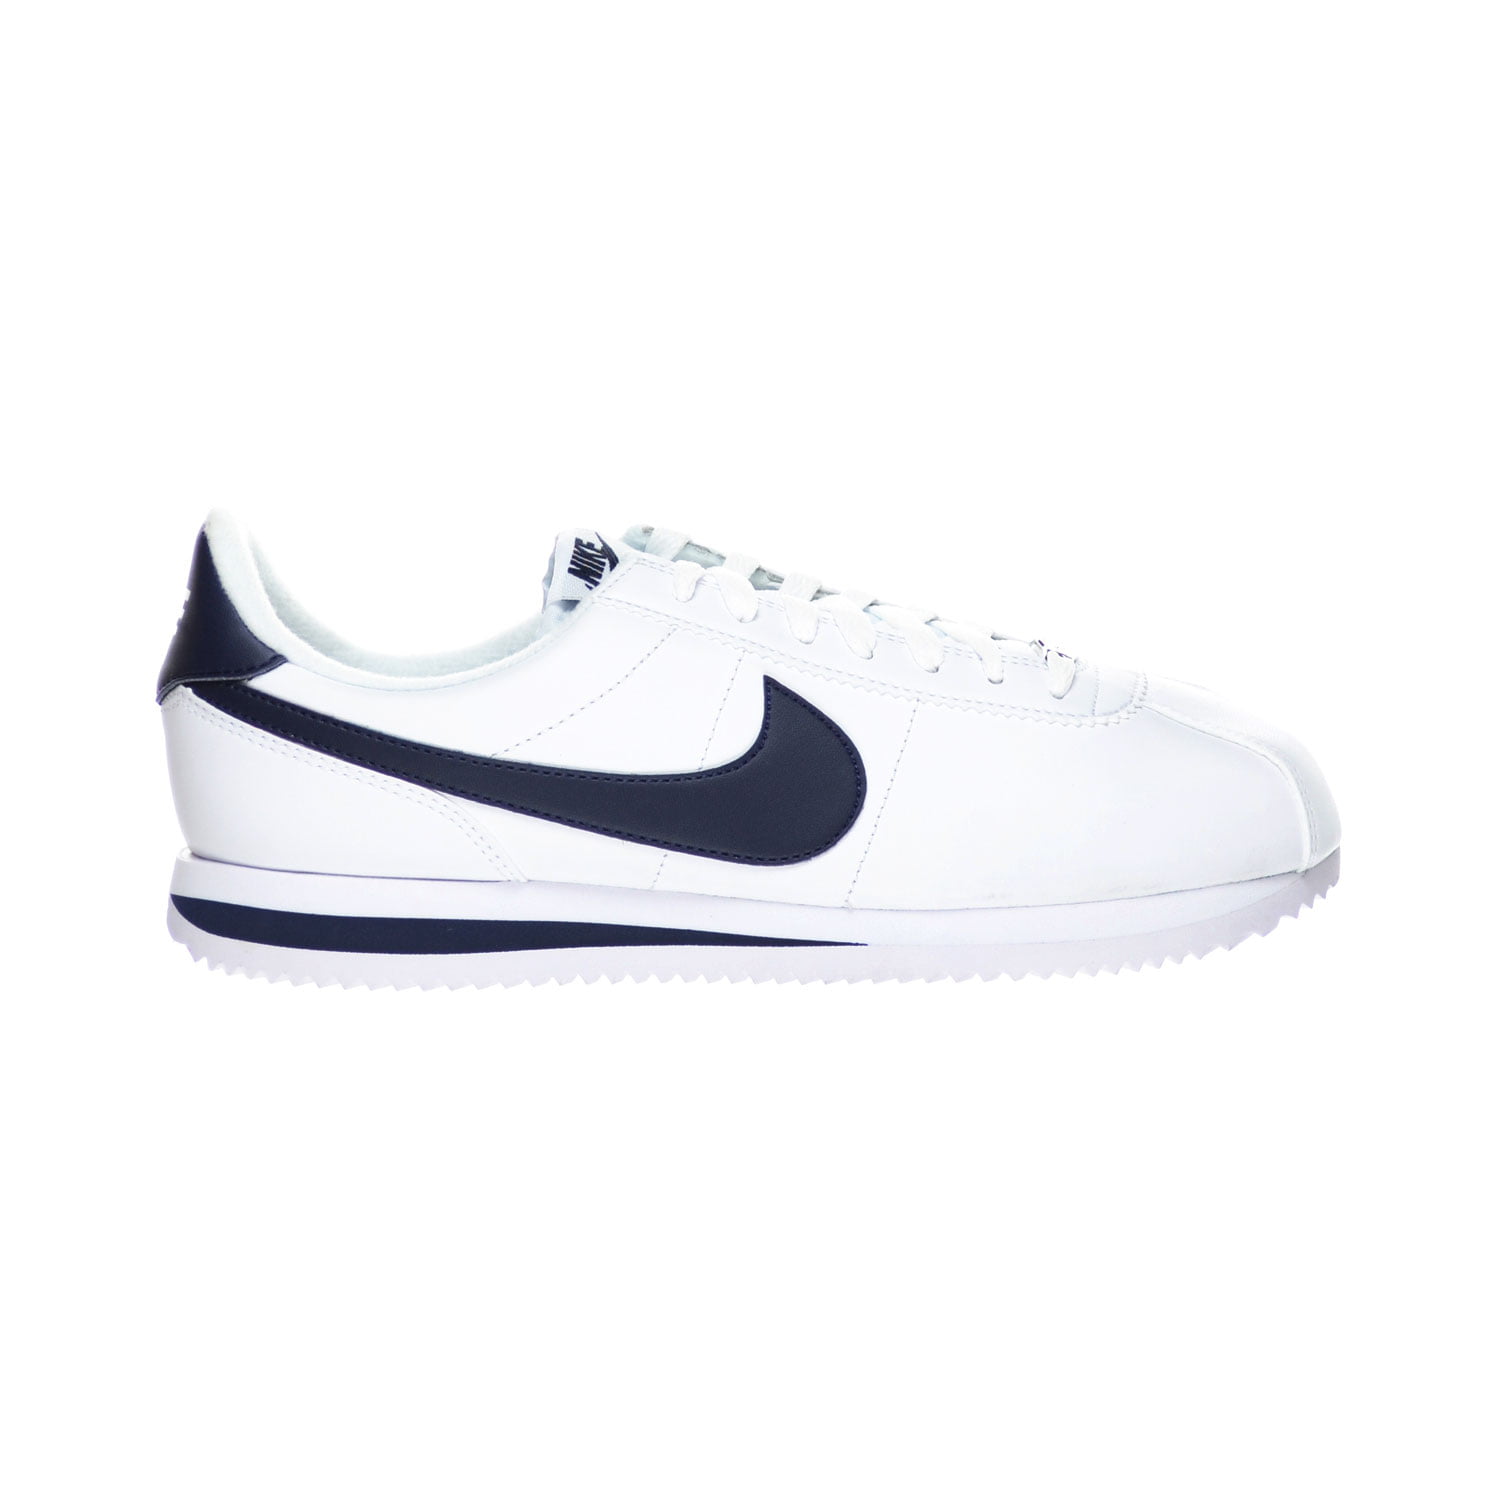 Nike Cortez Basic Leather Men's Shoes White/Obsidian Blue 819719-141 ...